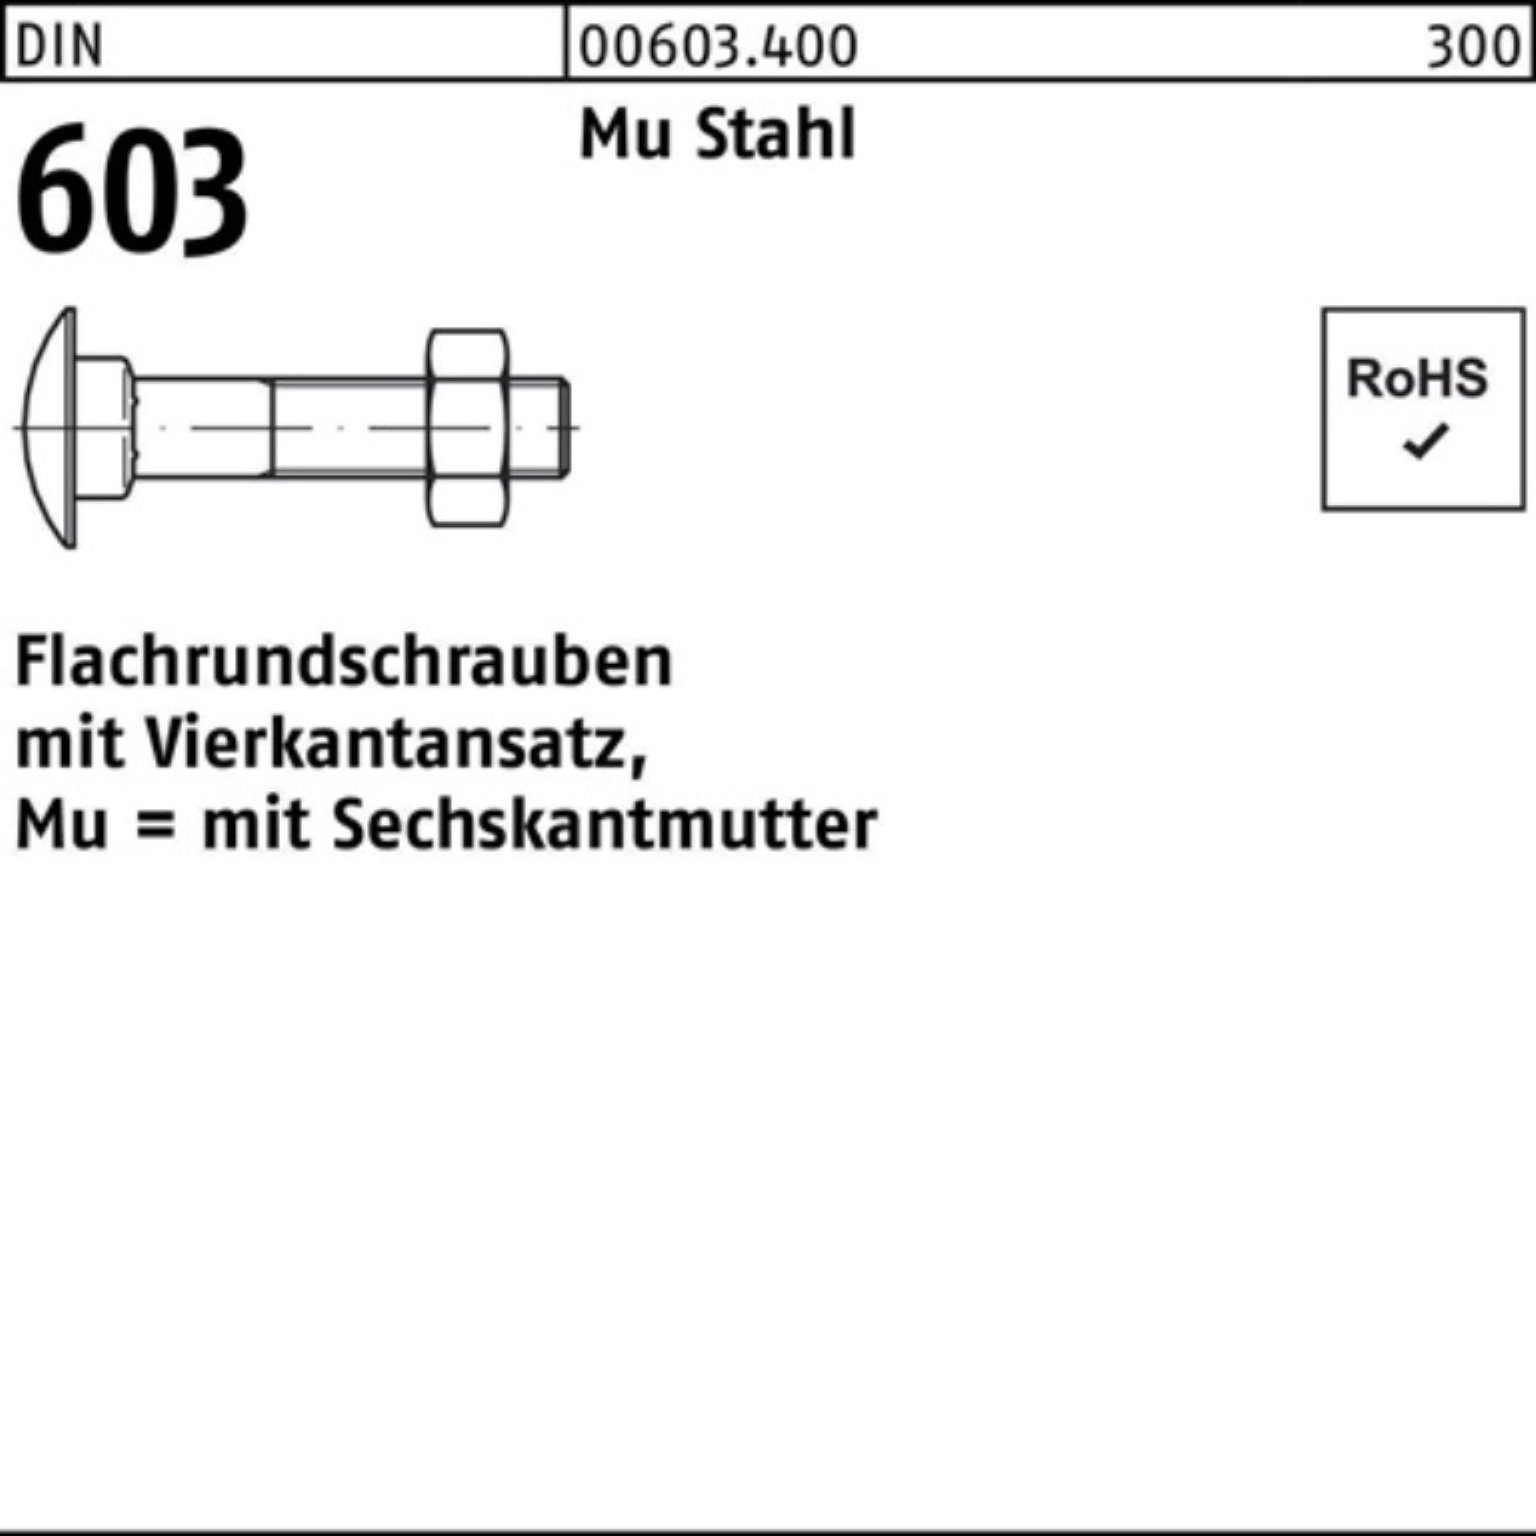 603 Pack 100er DIN M6x110 Vierkantansatz/6-ktmutter Reyher Schraube Flachrundschraube